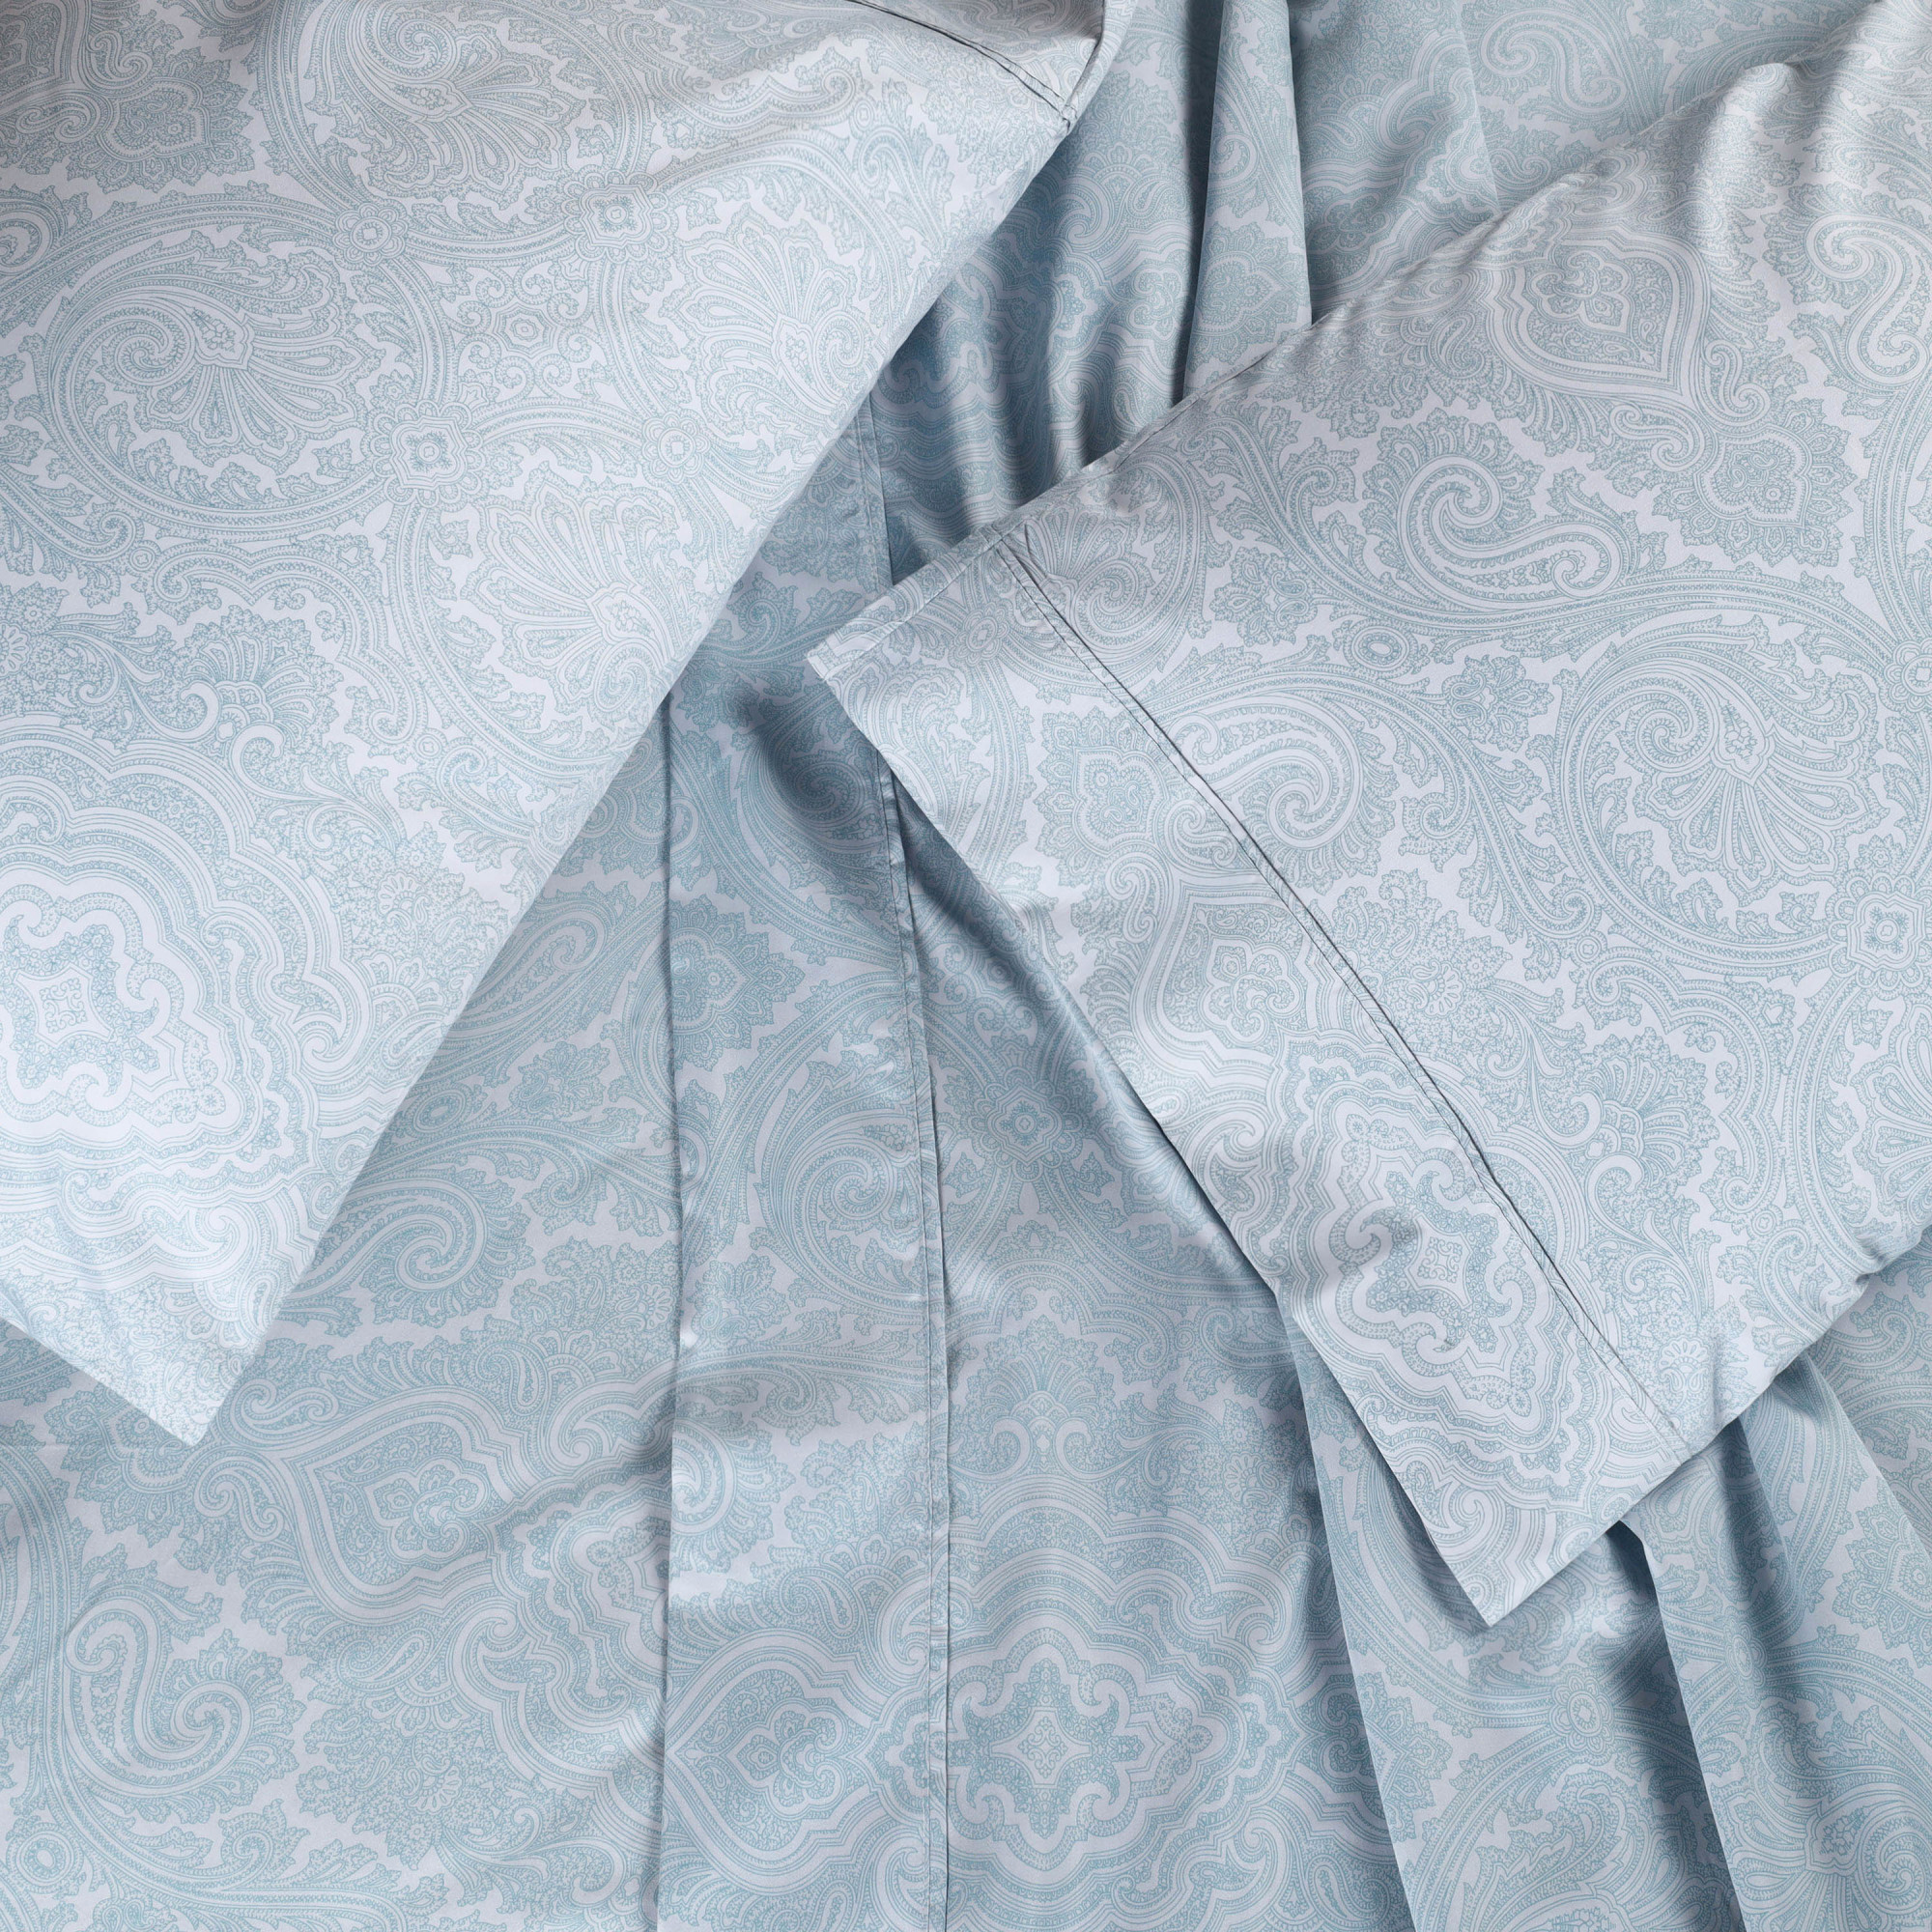 Superior 600 Thread Count Italian Paisley Cotton Blend Sheet Set, Full, Blue - image 5 of 7